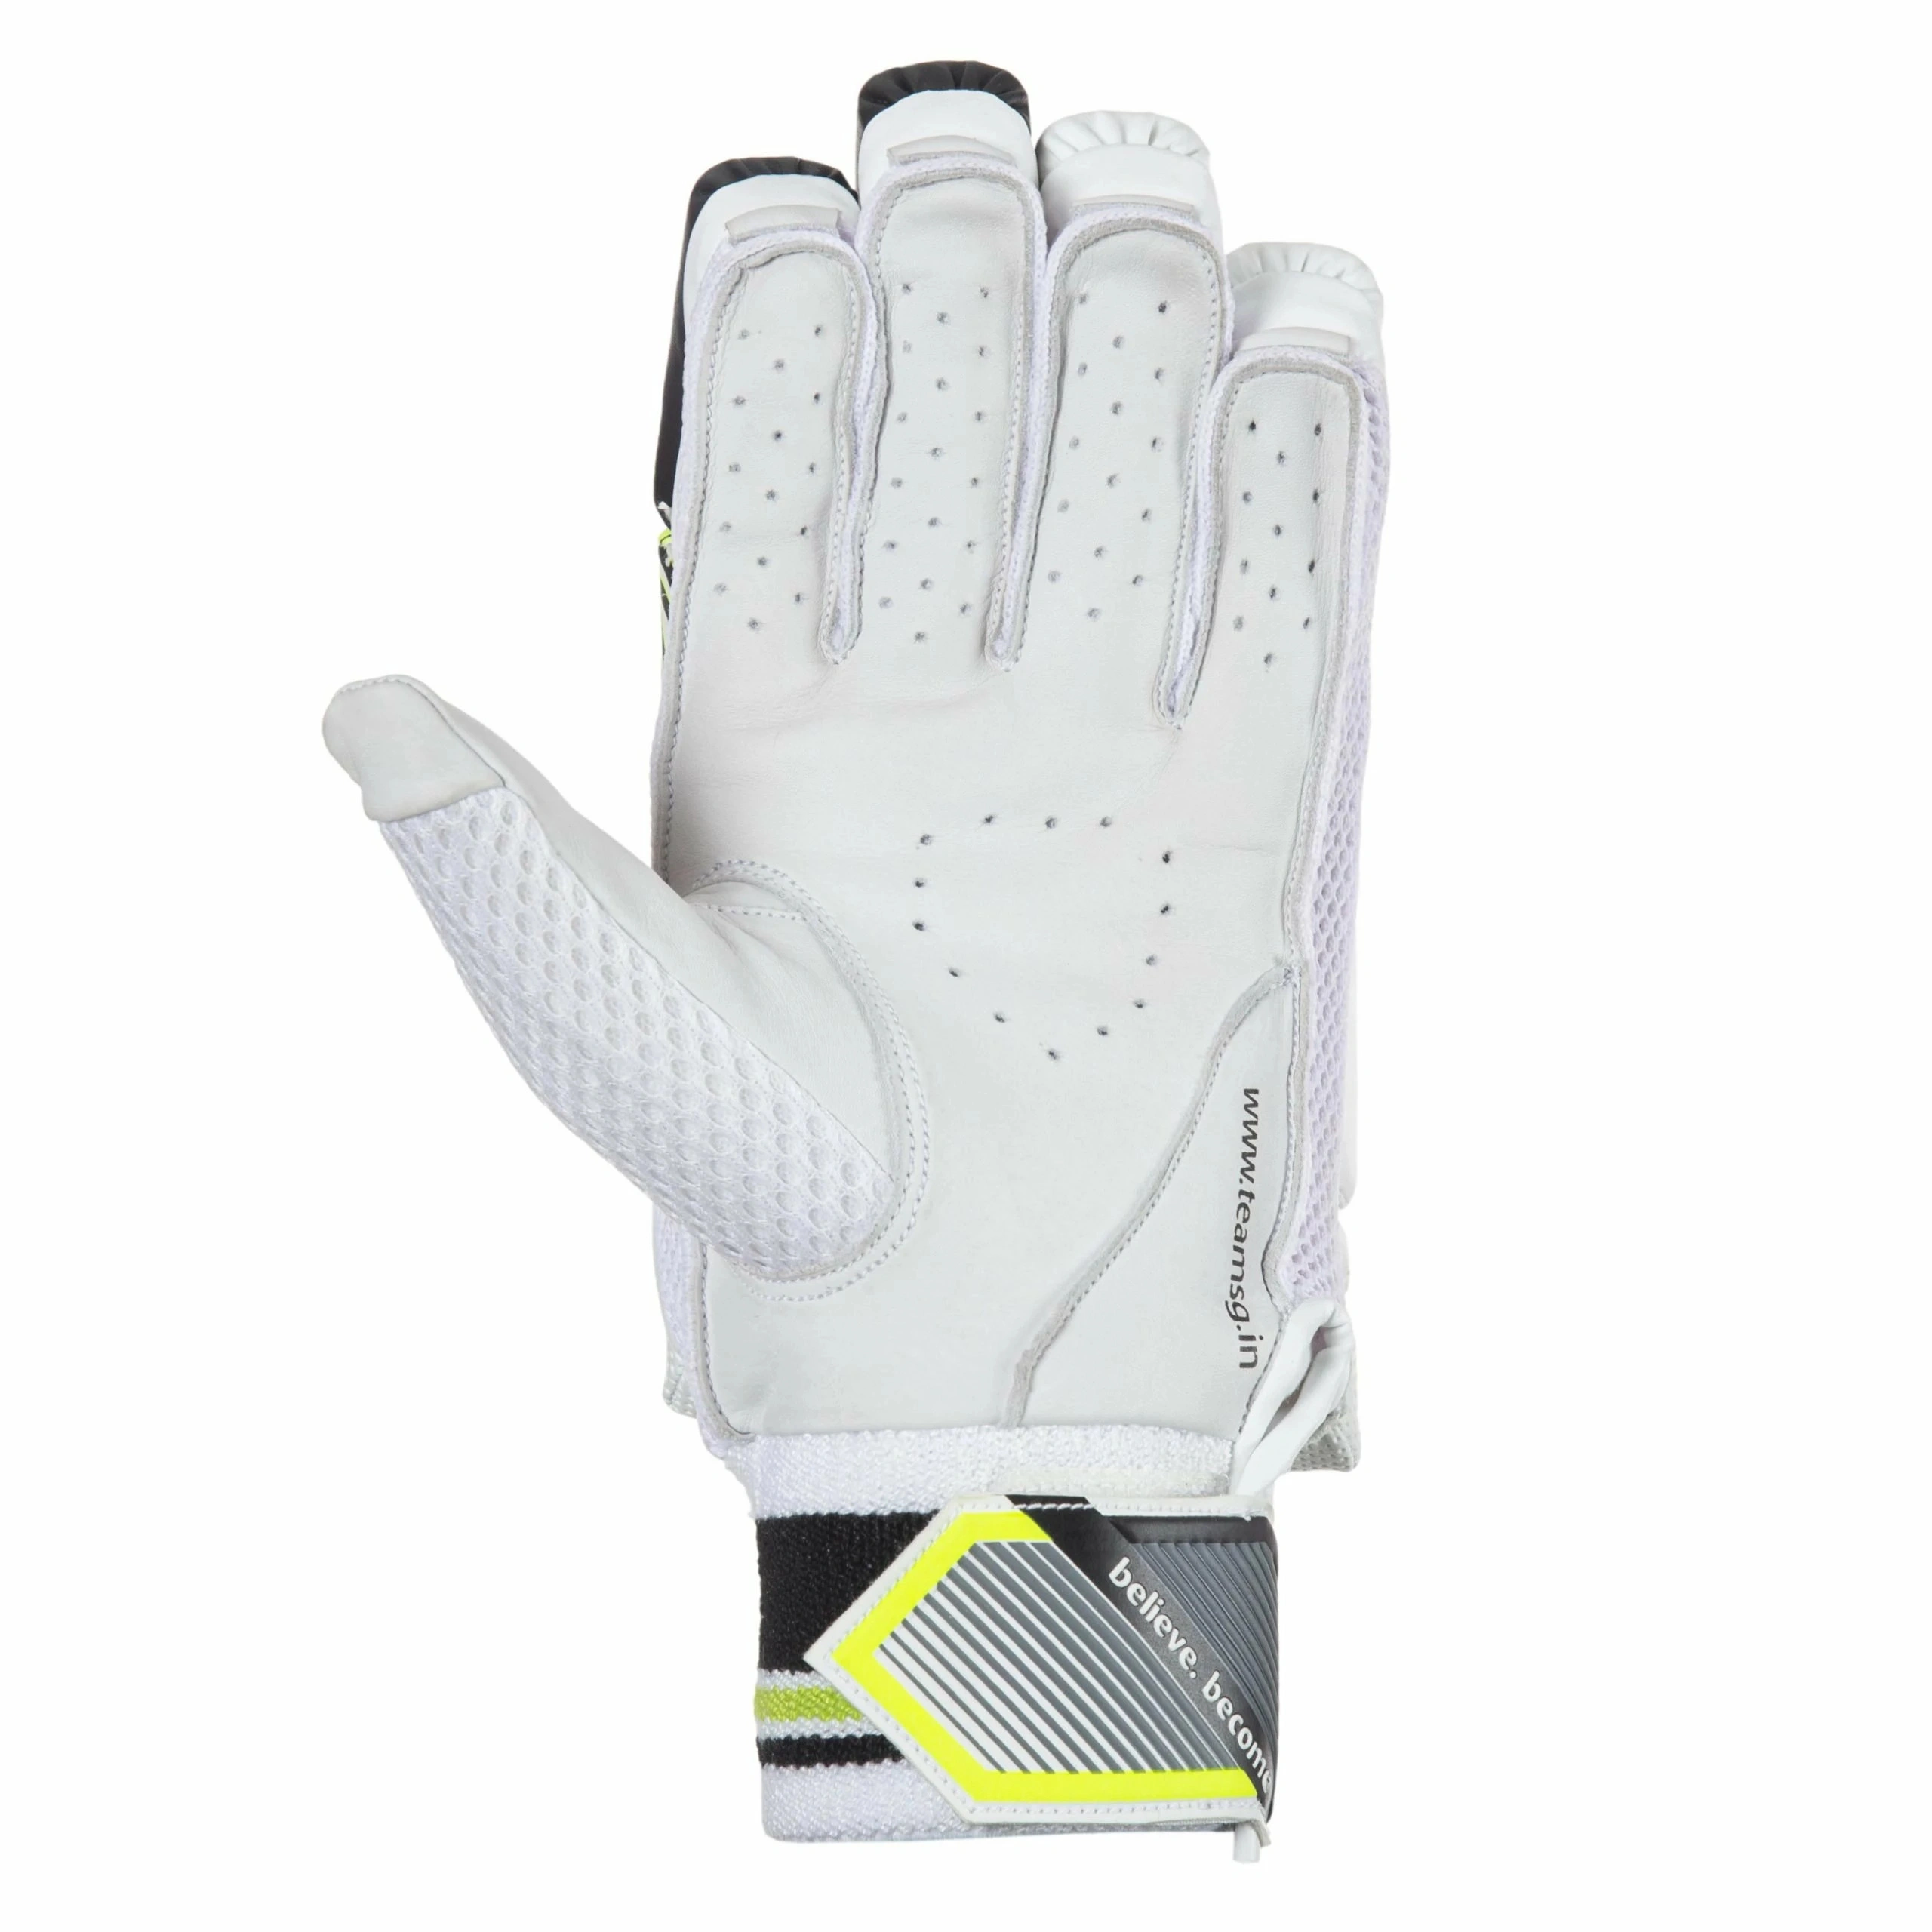 SG Excelite Batting Gloves High Quality Leather Palm-MENS-1 pair-2